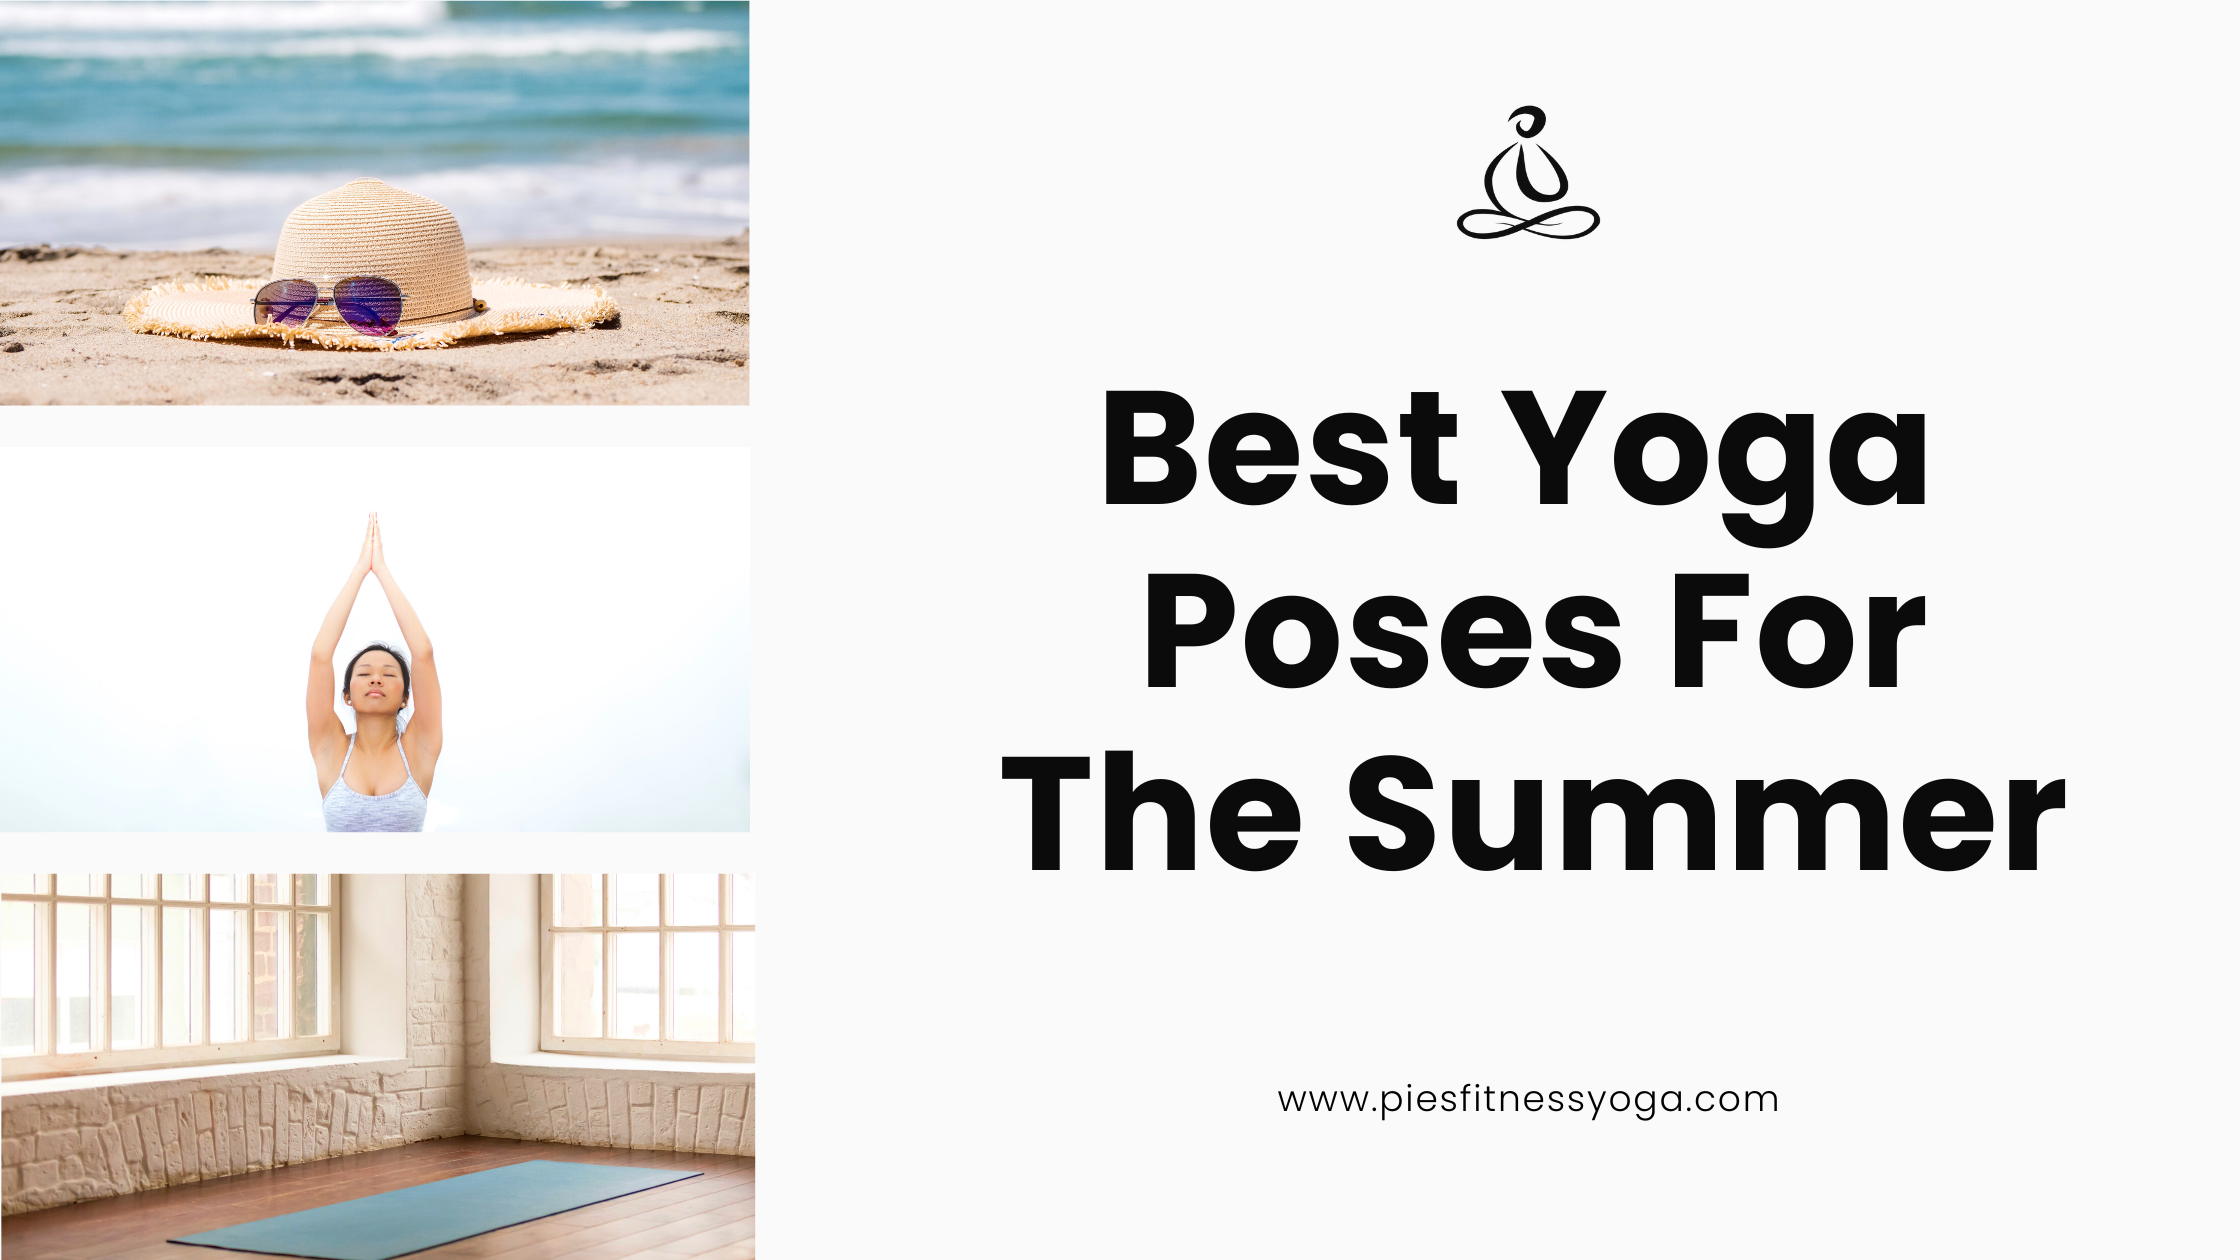 Winter Yoga - Spring Yoga - Fall Yoga - Summer Yoga - Your Therapy Source